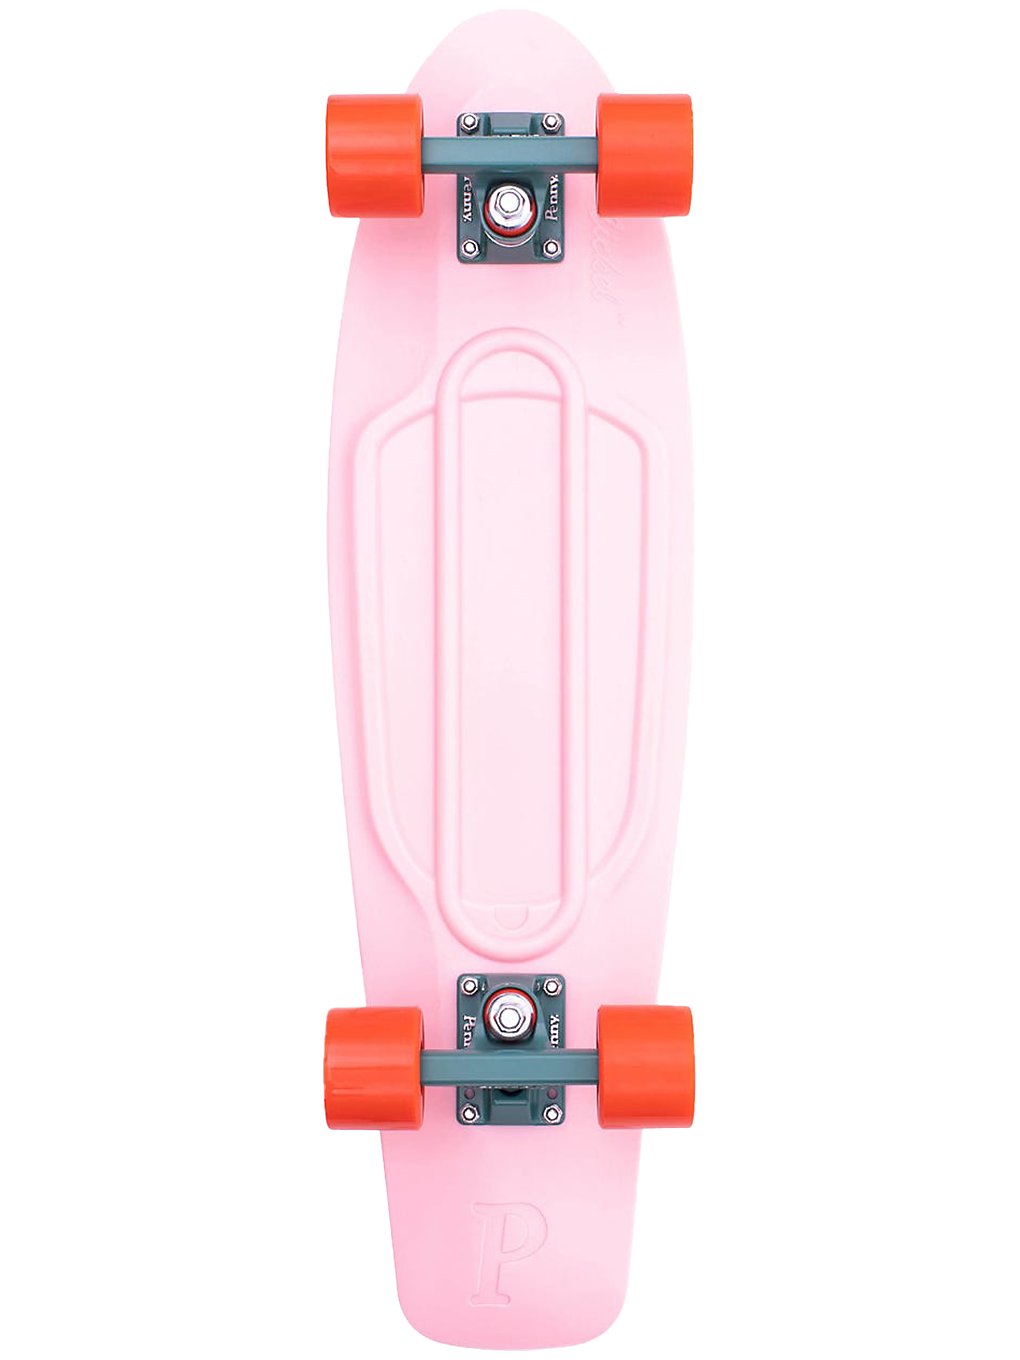 Penny Skateboards Cactus Wanderlust 27 Complete pink